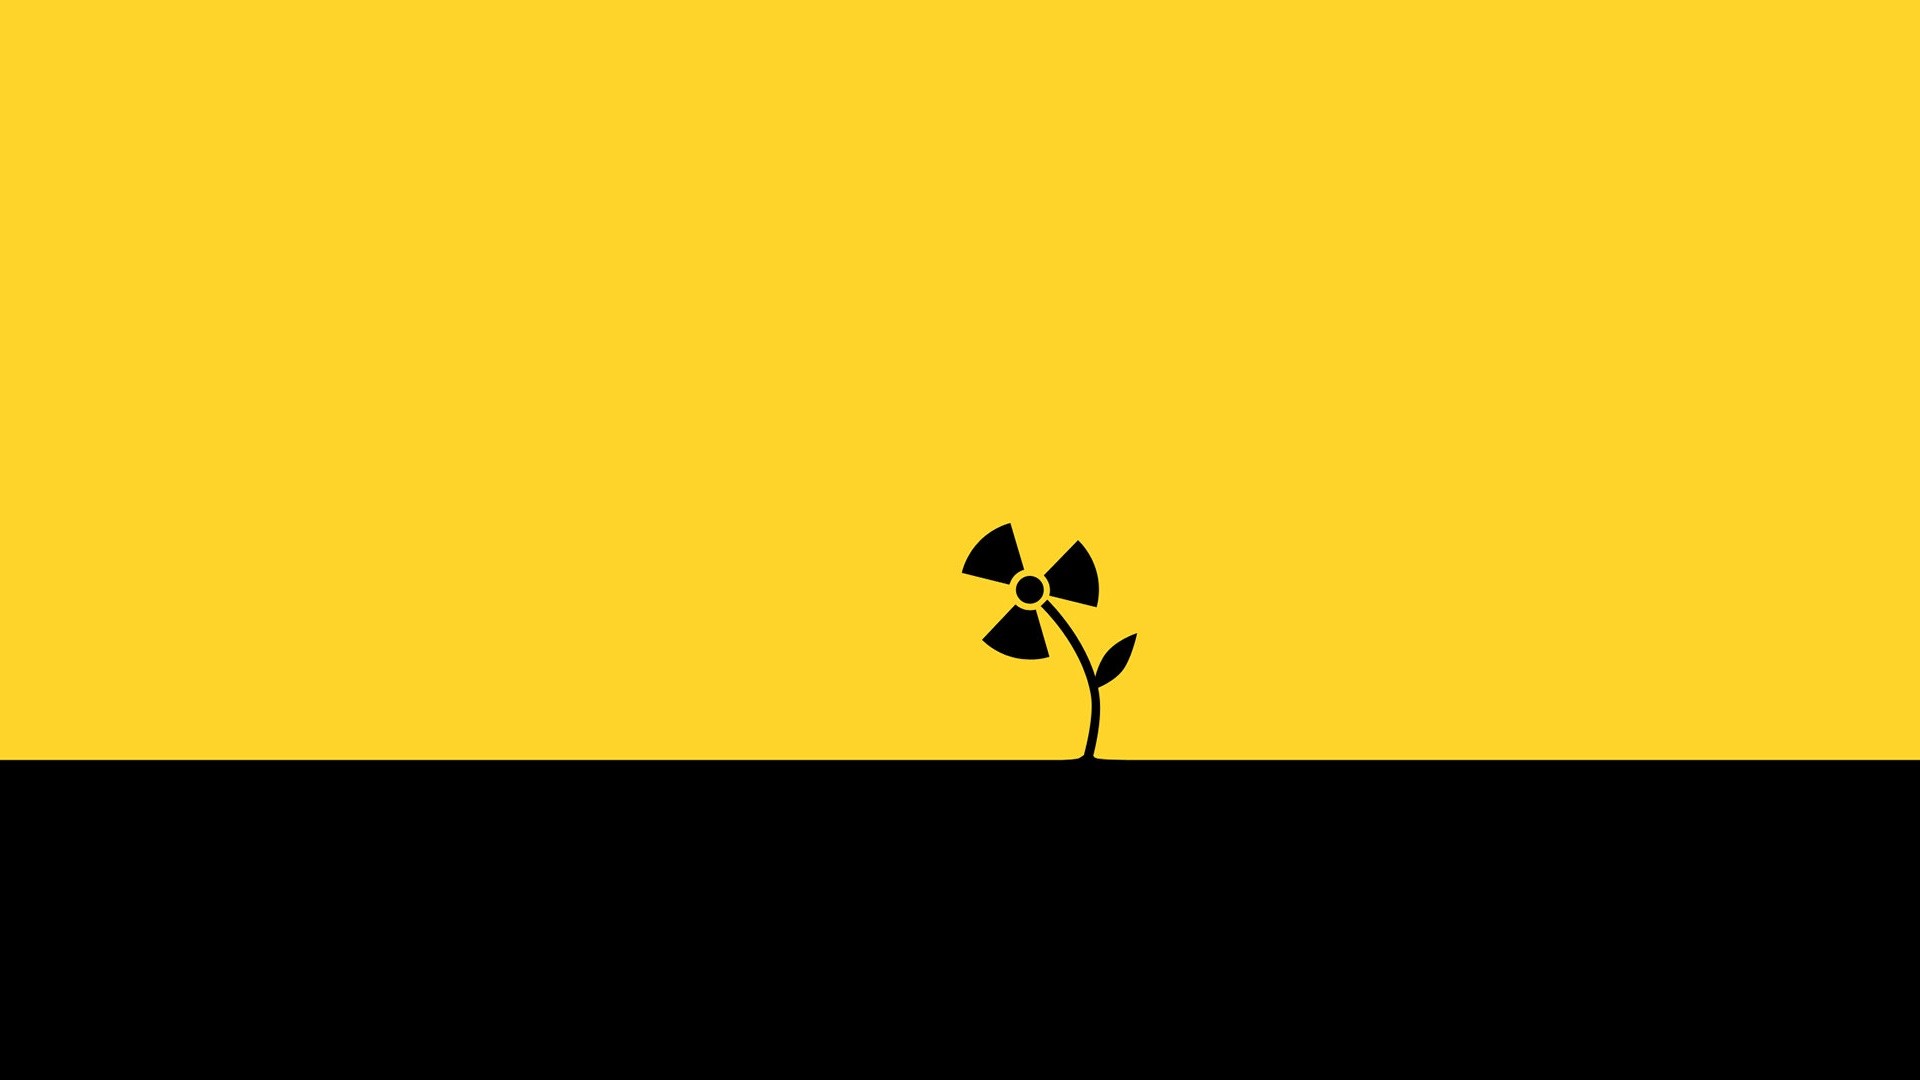 General 1920x1080 digital art minimalism simple background flowers plants leaves radioactive black yellow background